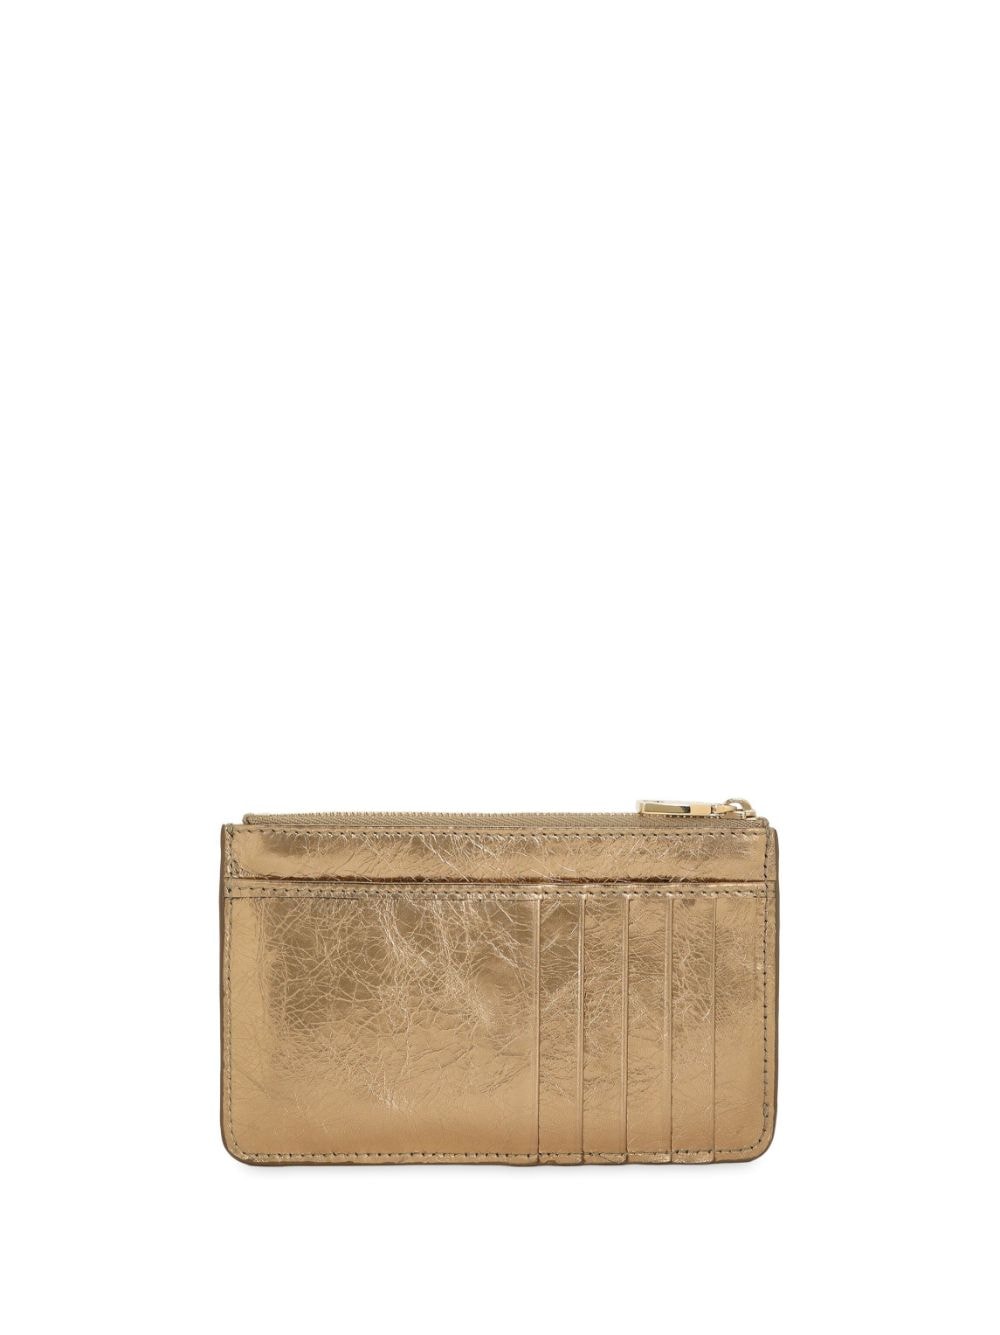 Image 2 of Dolce & Gabbana metallic-effect leather cardholder